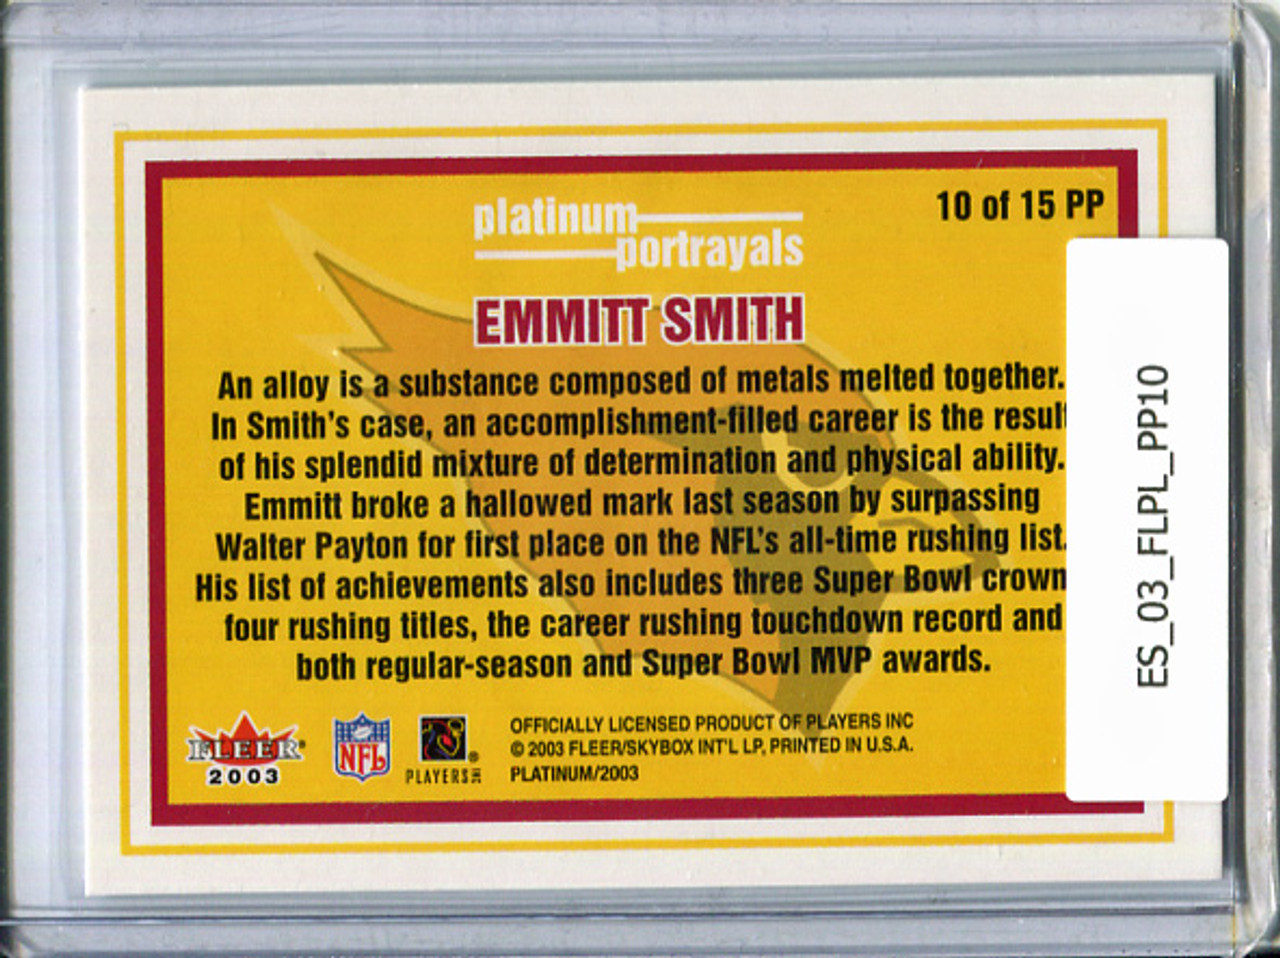 Emmitt Smith 2003 Platinum, Platinum Portrayals #PP10